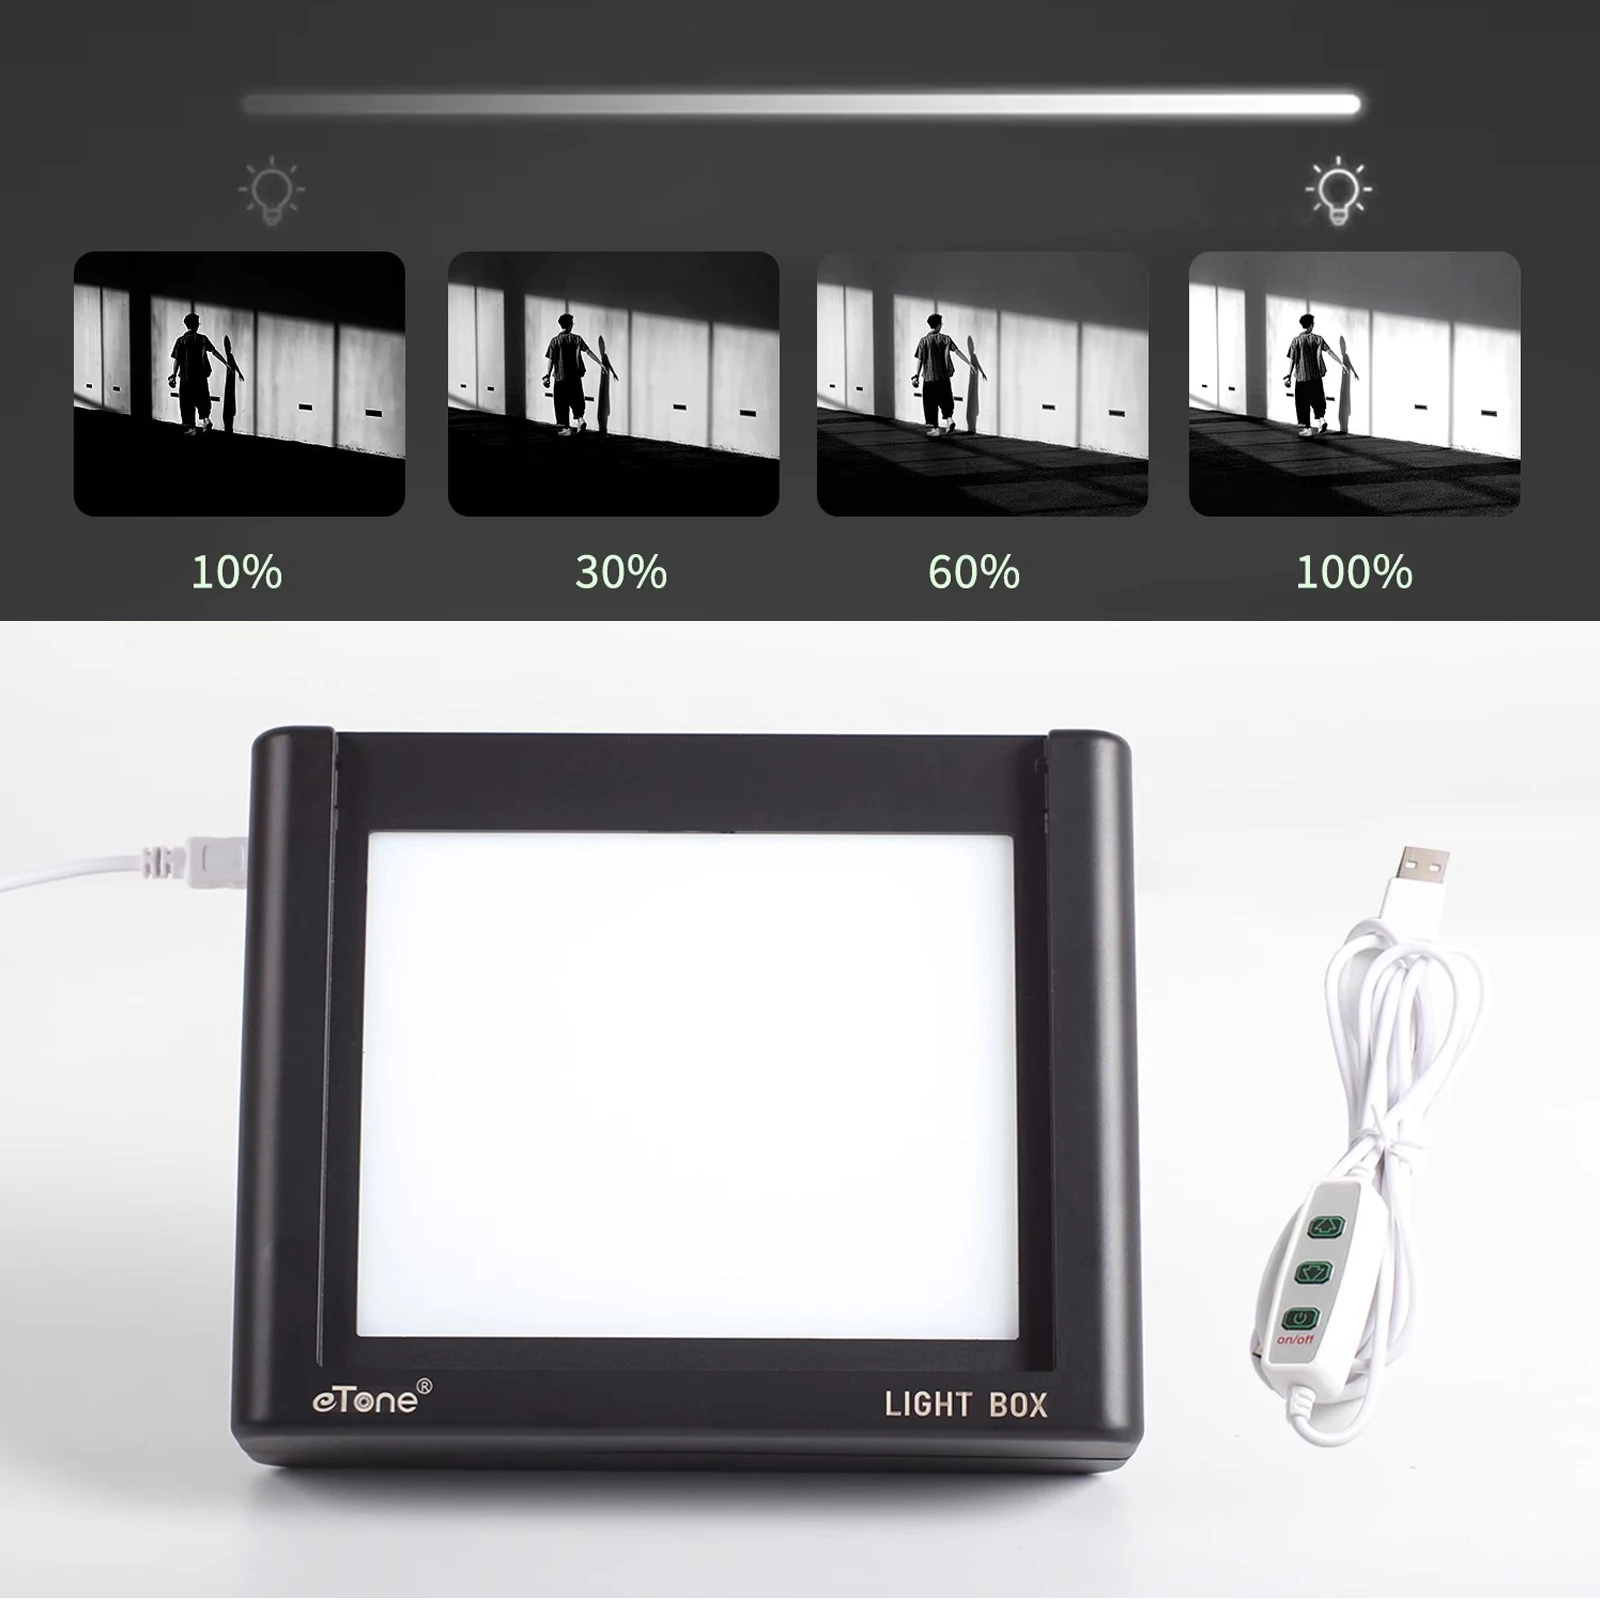 135 Film Scanner Light Box 120 4X5 Slide Negative Viewer Convert Film to Digital